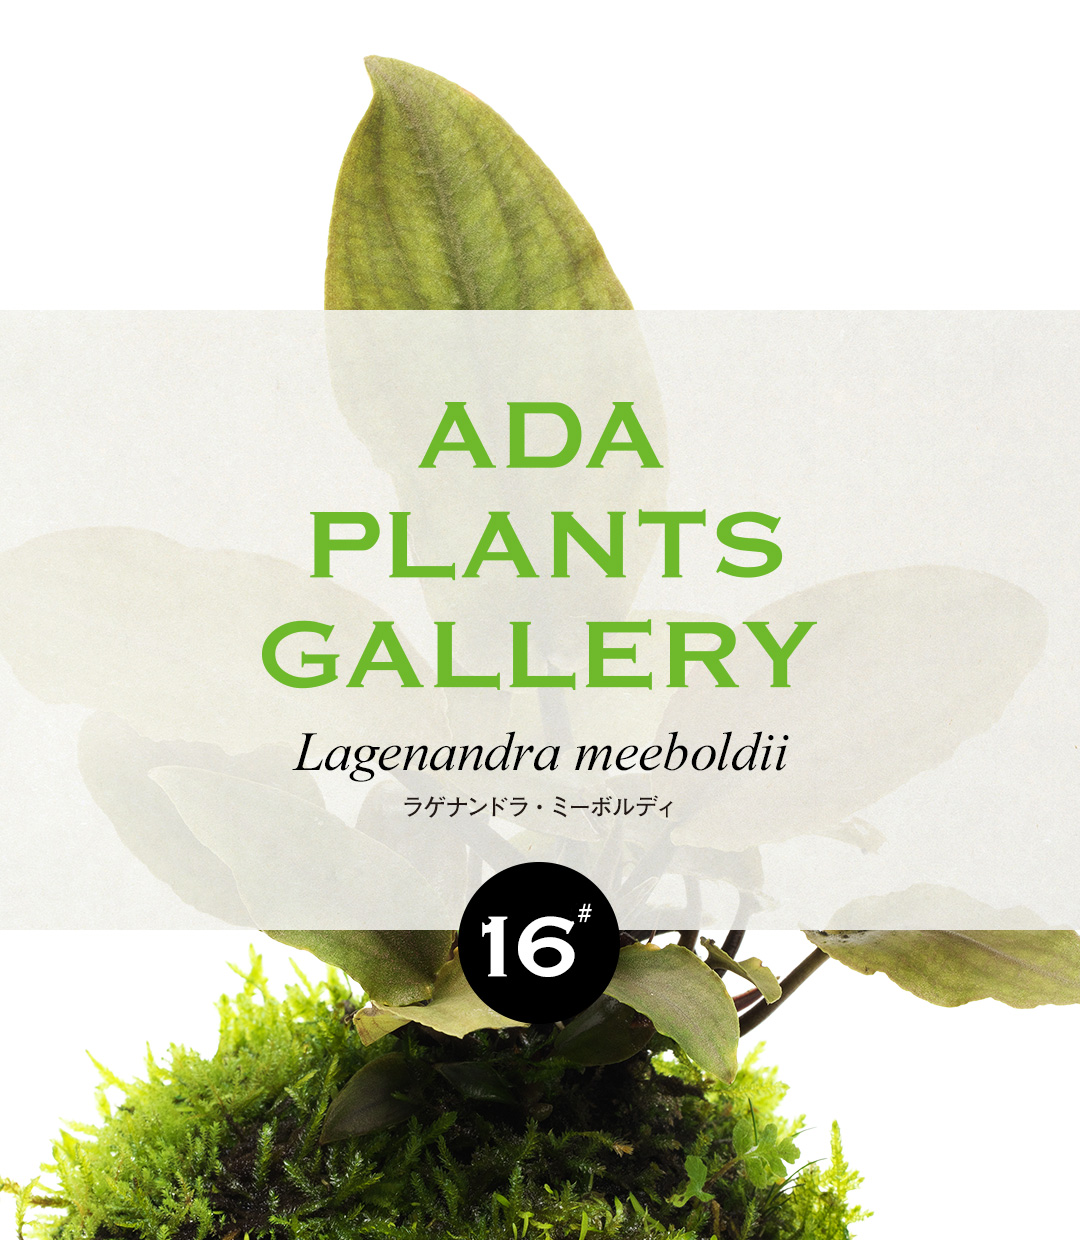 ADA PLANTS GALLERY #16 Lagenandra meeboldii